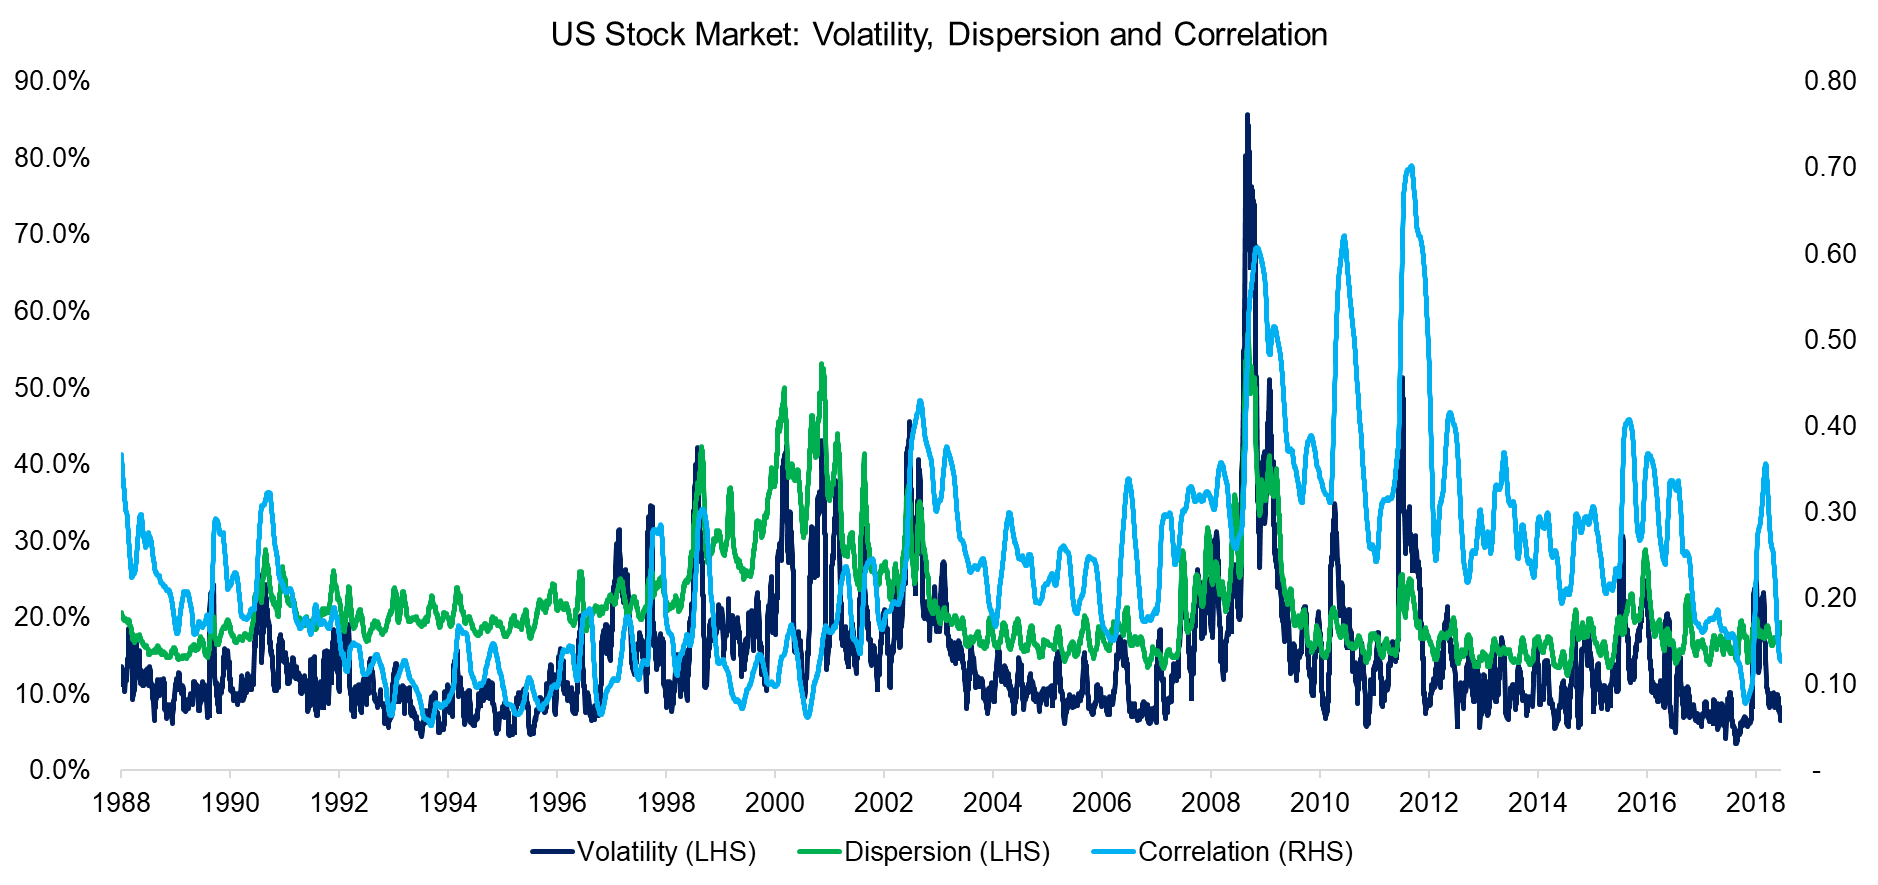 US Stock Market Volatility, Dispersion and Correlation